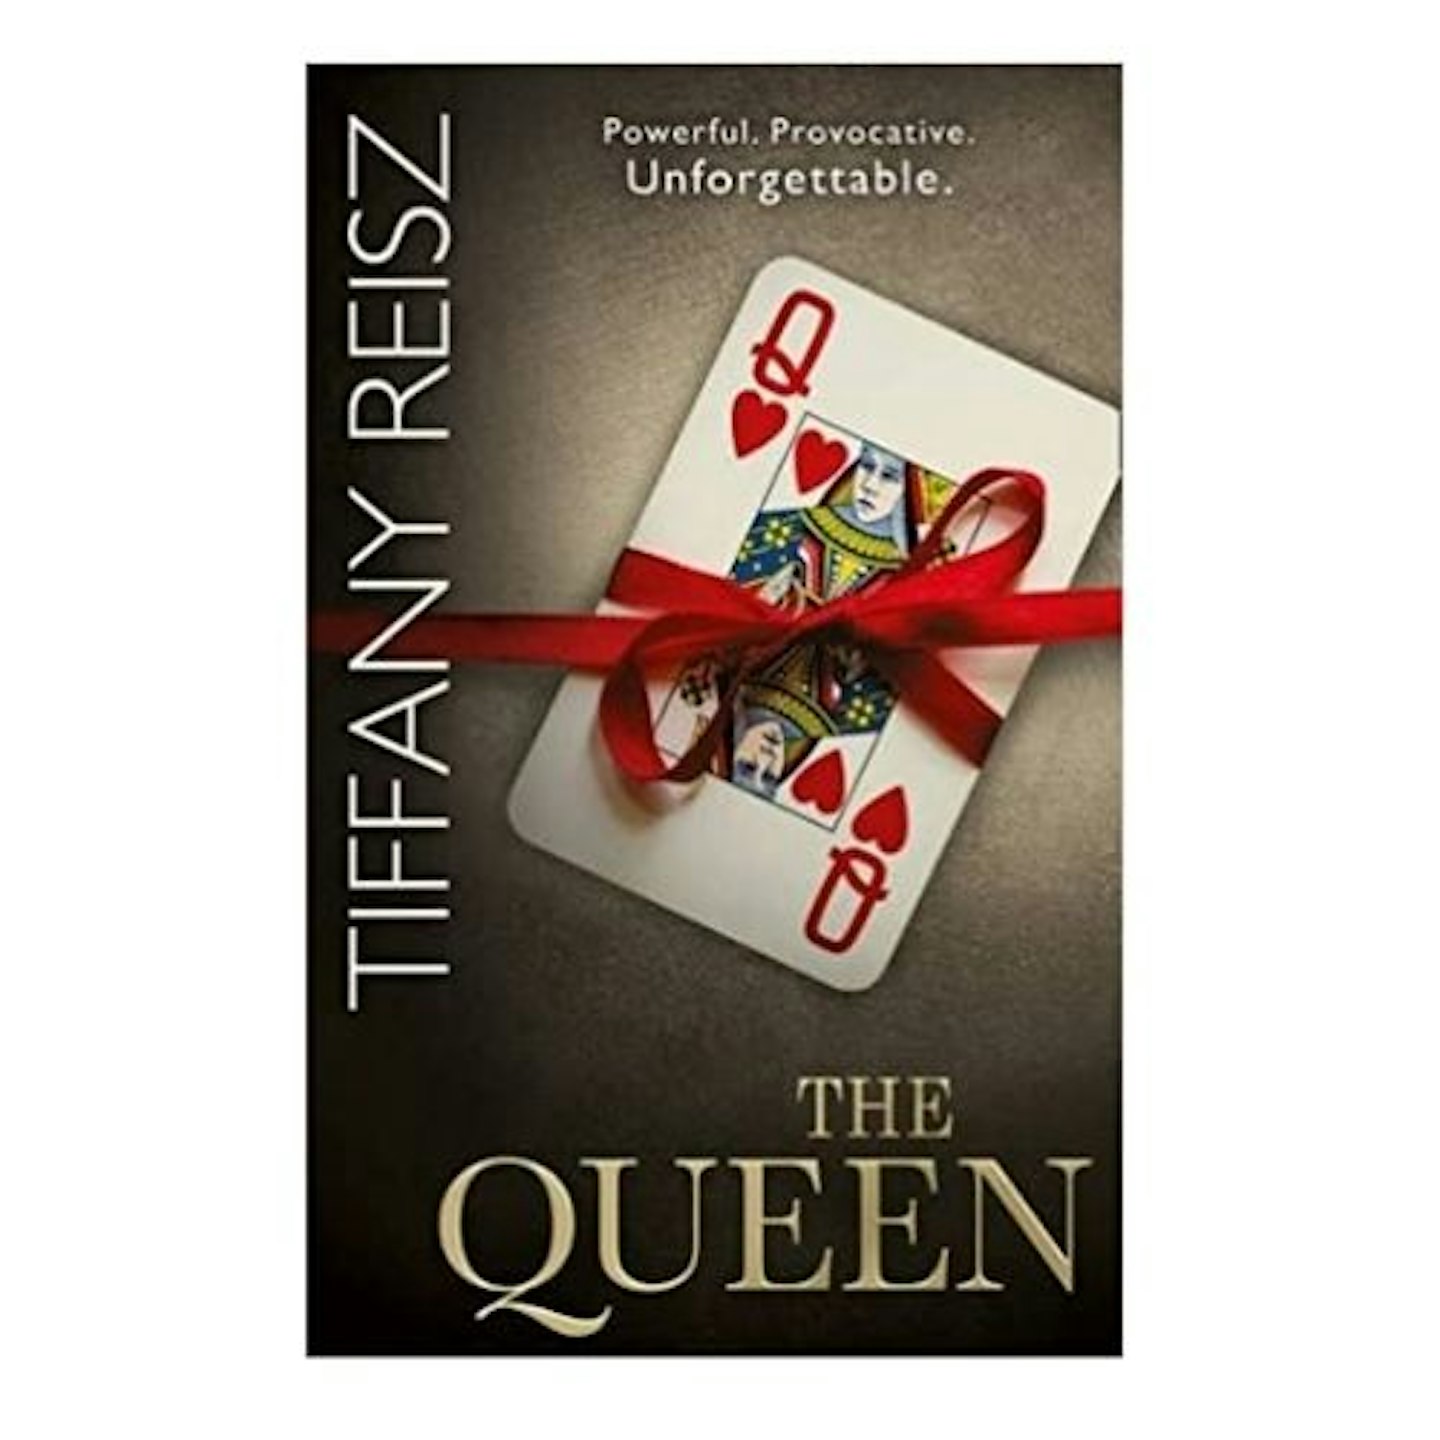 The Queen (The Original Sinners)